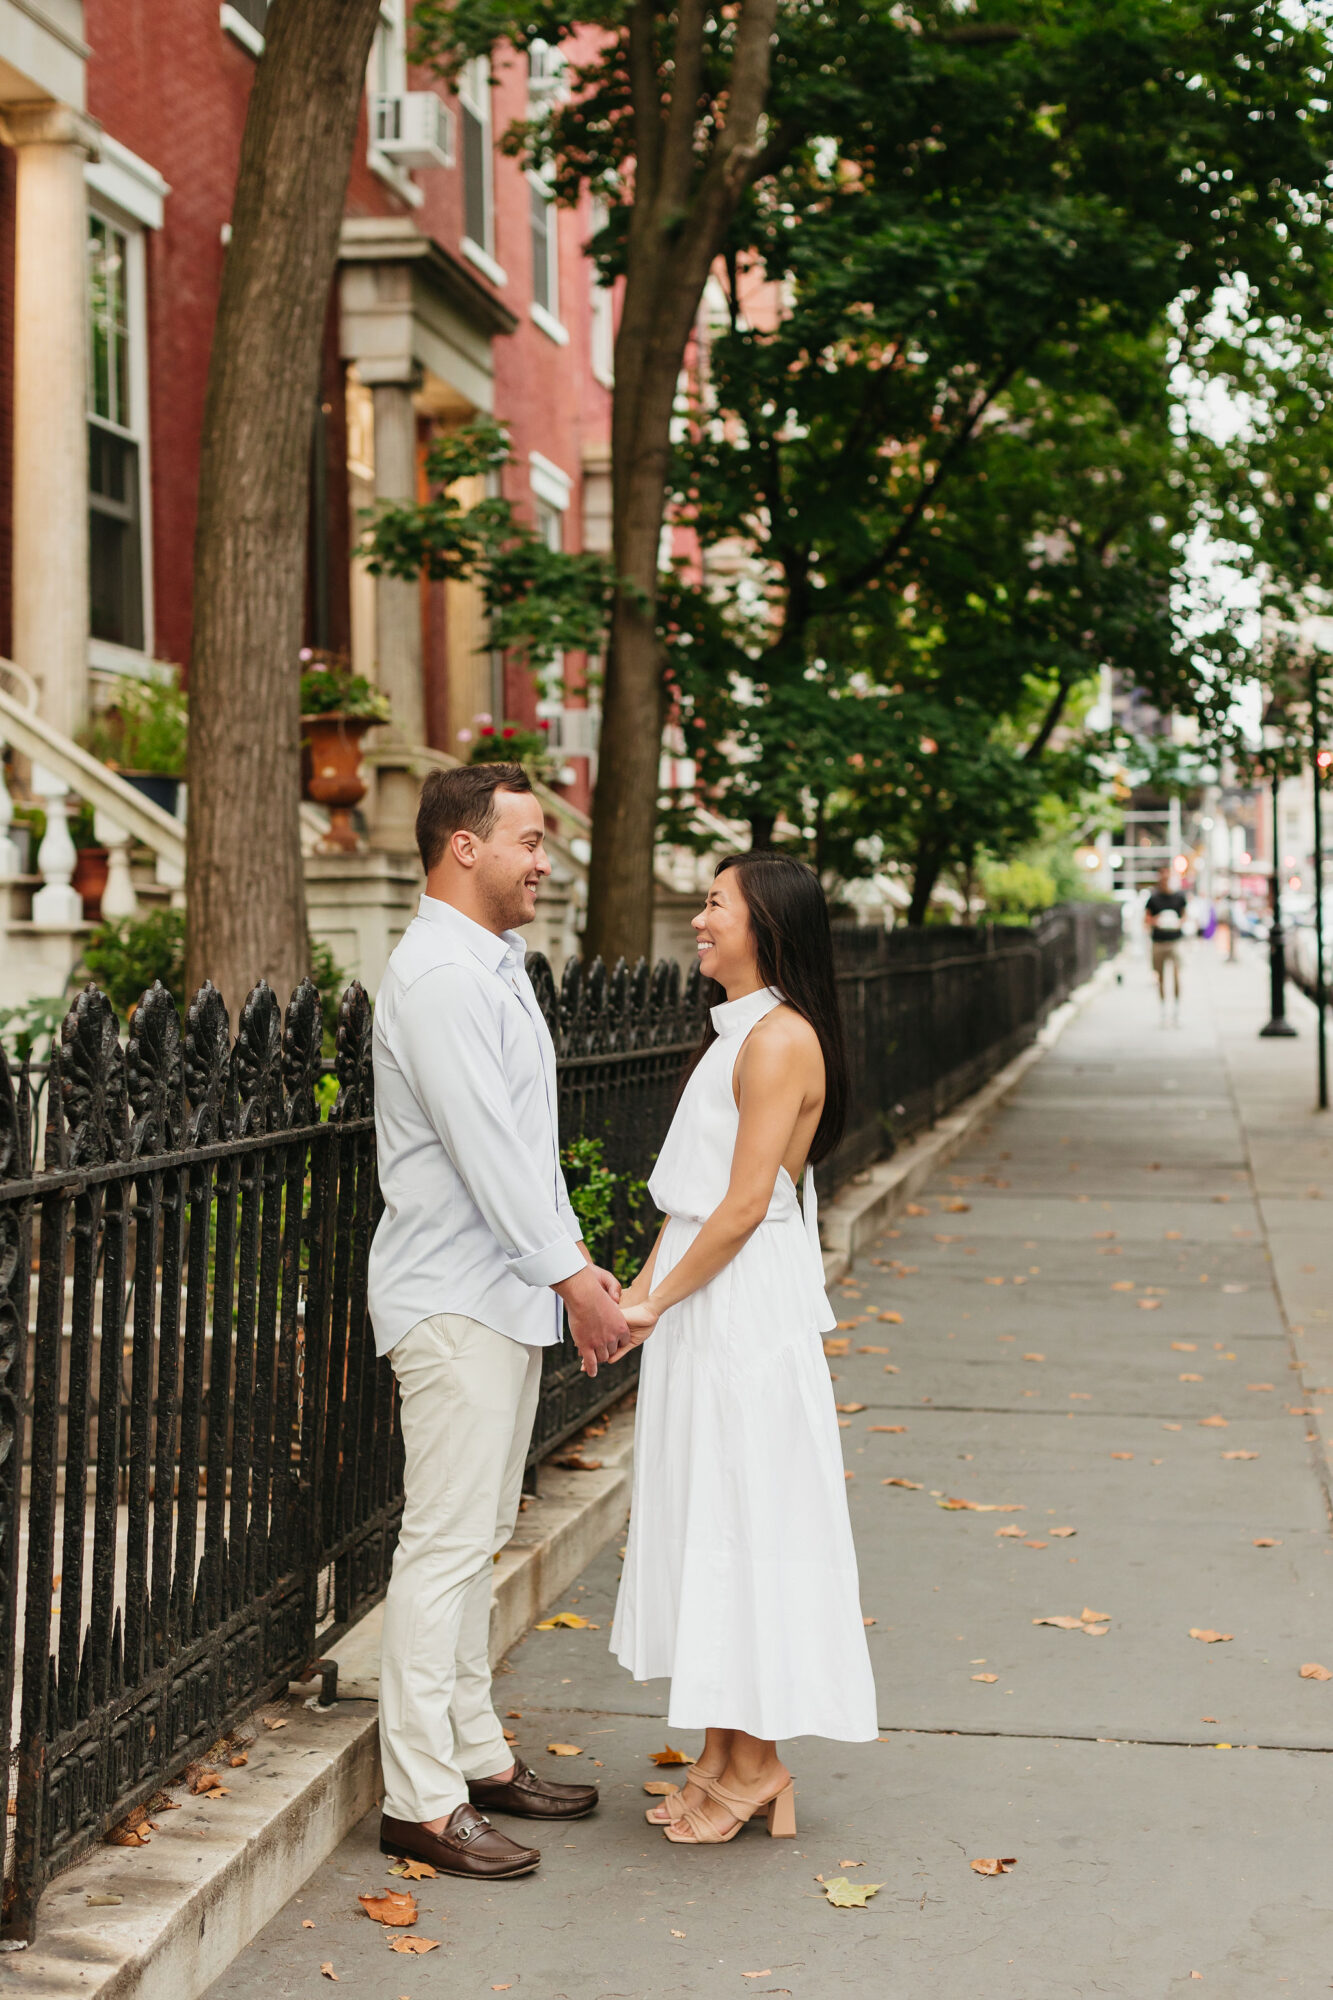 Washington square park, engagement photos, new york city streets, white dress